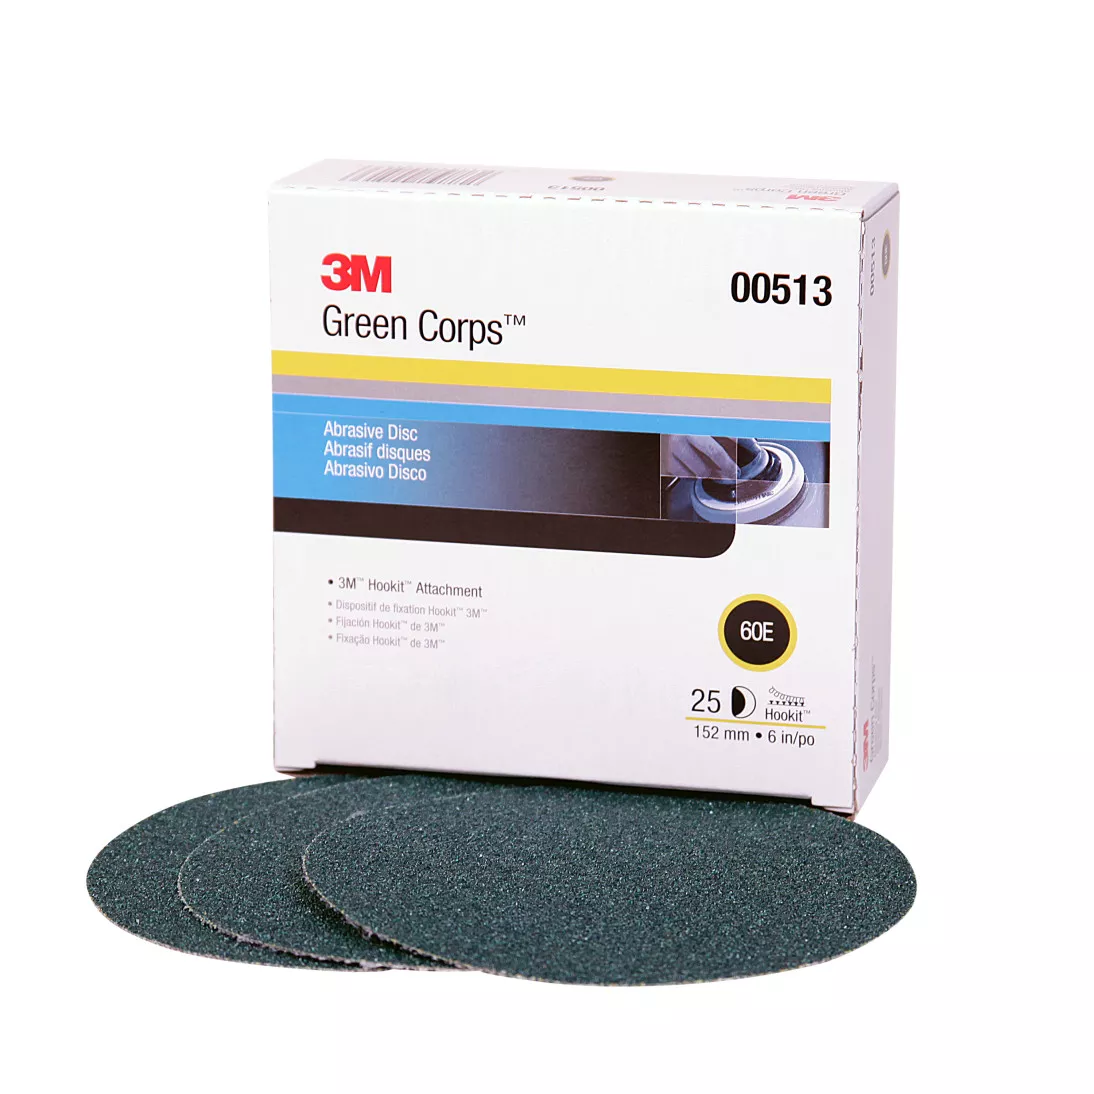 3M™ Green Corps™ Hookit™ Disc, 00513, 6 in, 60, 25 discs per carton, 5
cartons per case